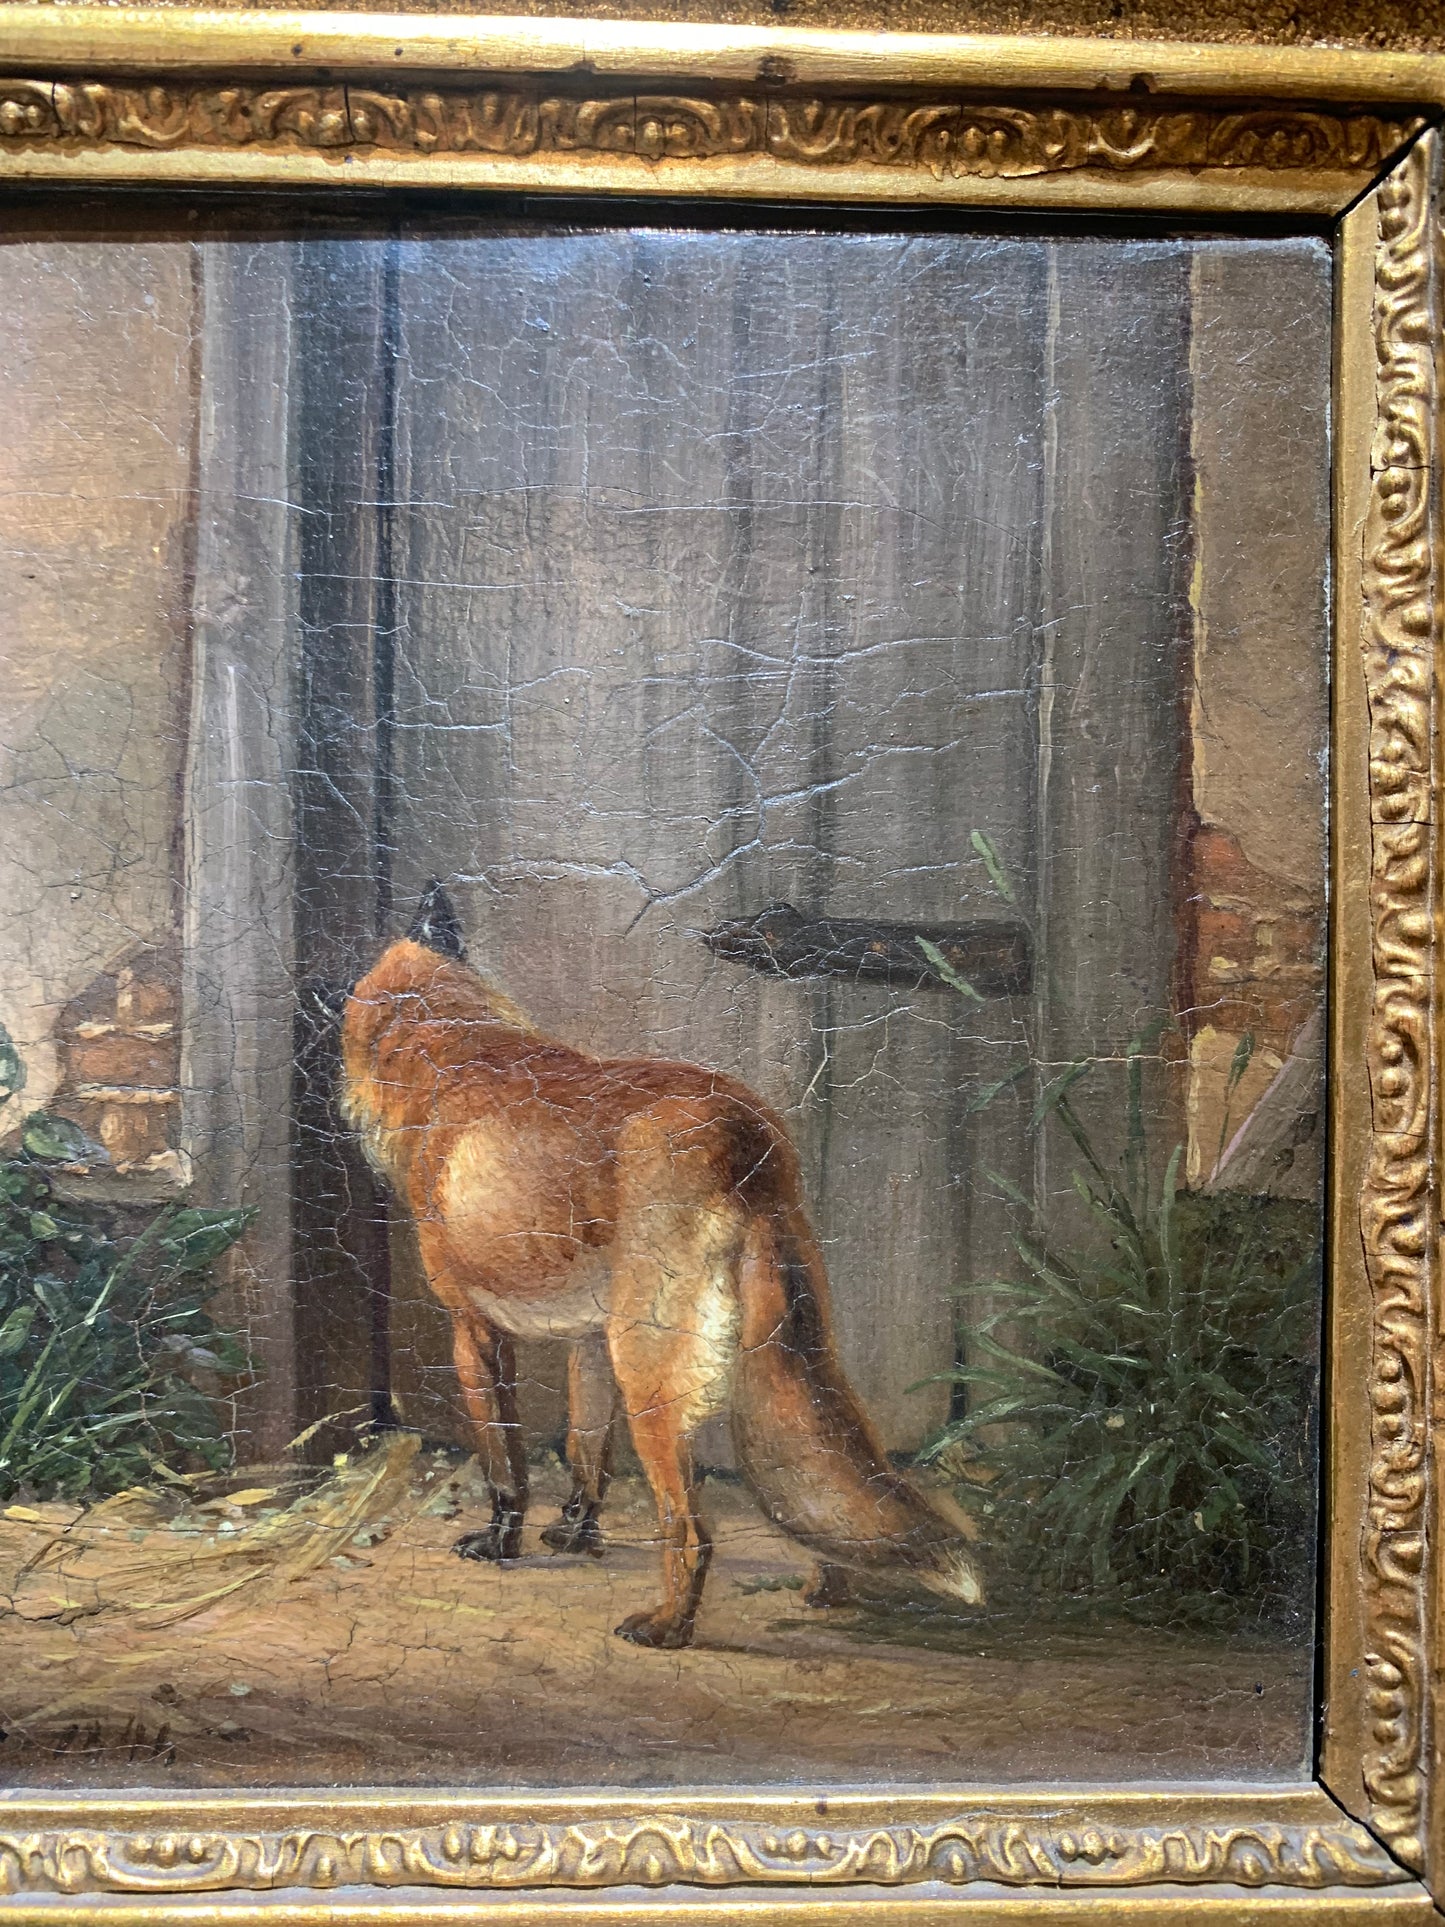 The fox hunting prey. Painting signed Wegener, dated 1841.